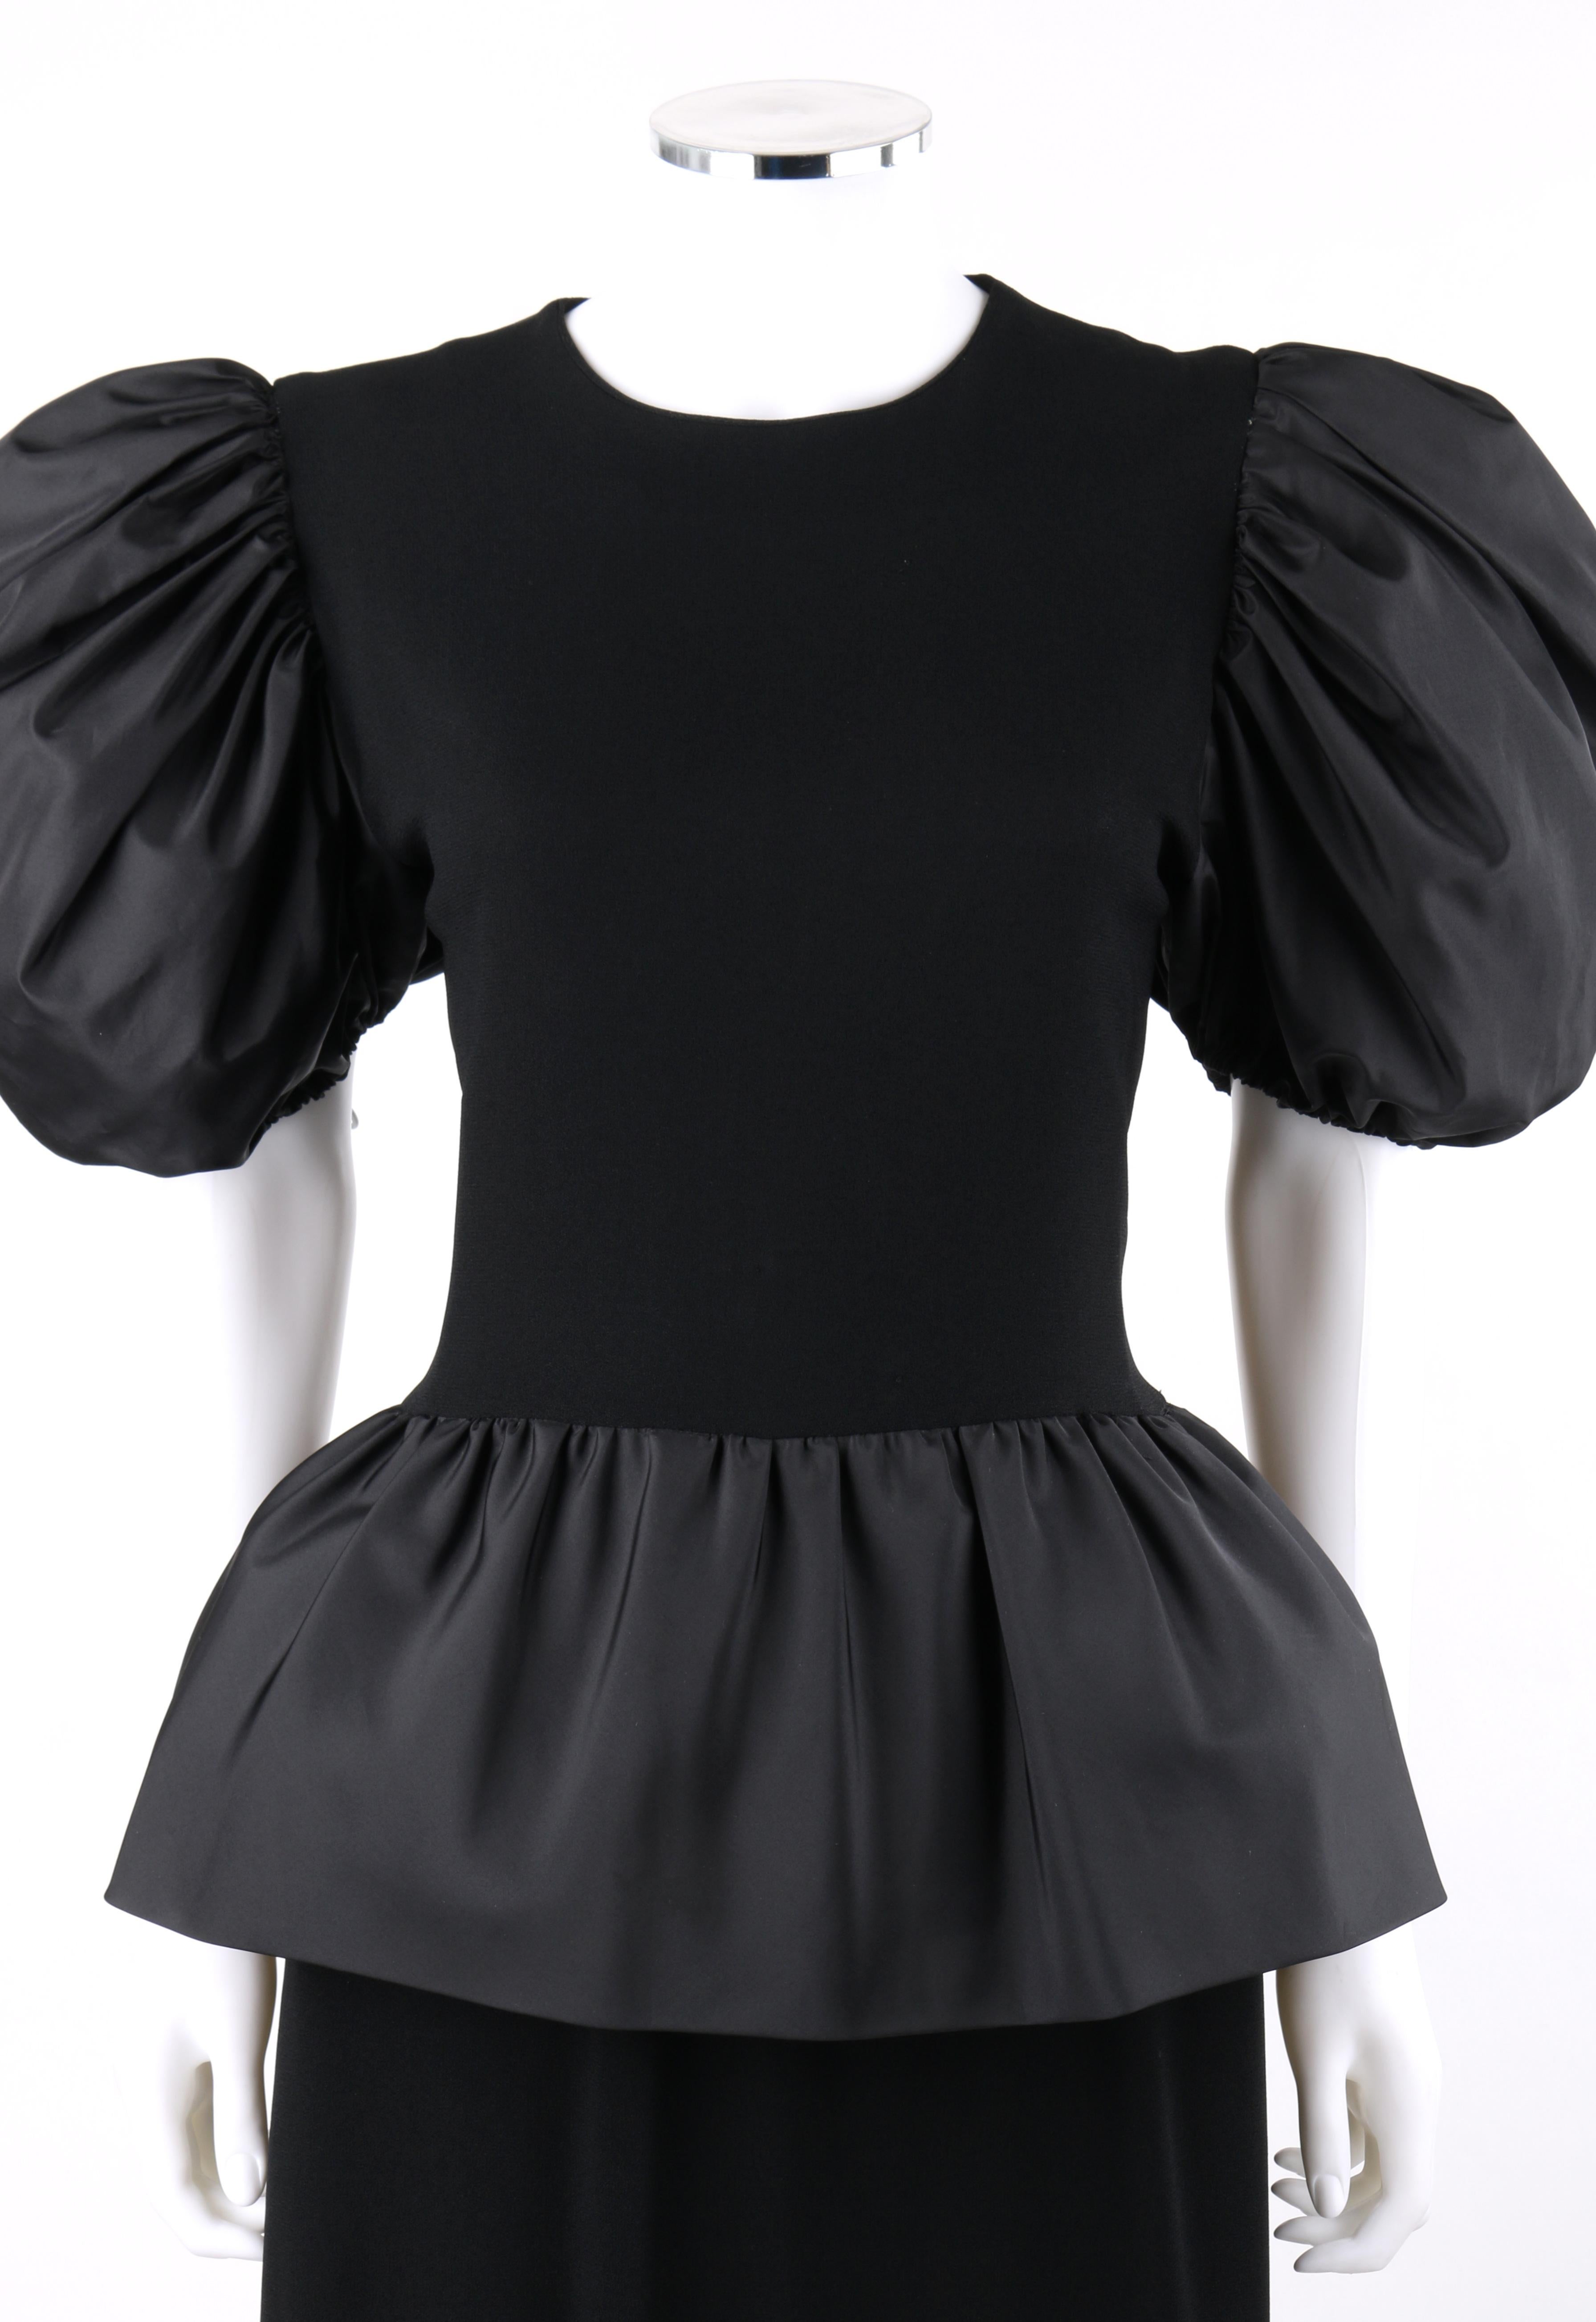 BILL BLASS c.1980's Black Crepe Dramatic Puffed Sleeve Peplum Skirt Party Dress
 
Circa: 1980’s
Label(s): Bill Blass Collection III
Designer: Bill Blass
Style: Peplum dress
Color(s): Black (exterior, interior)
Lined: No
Unmarked Fabric Content (feel